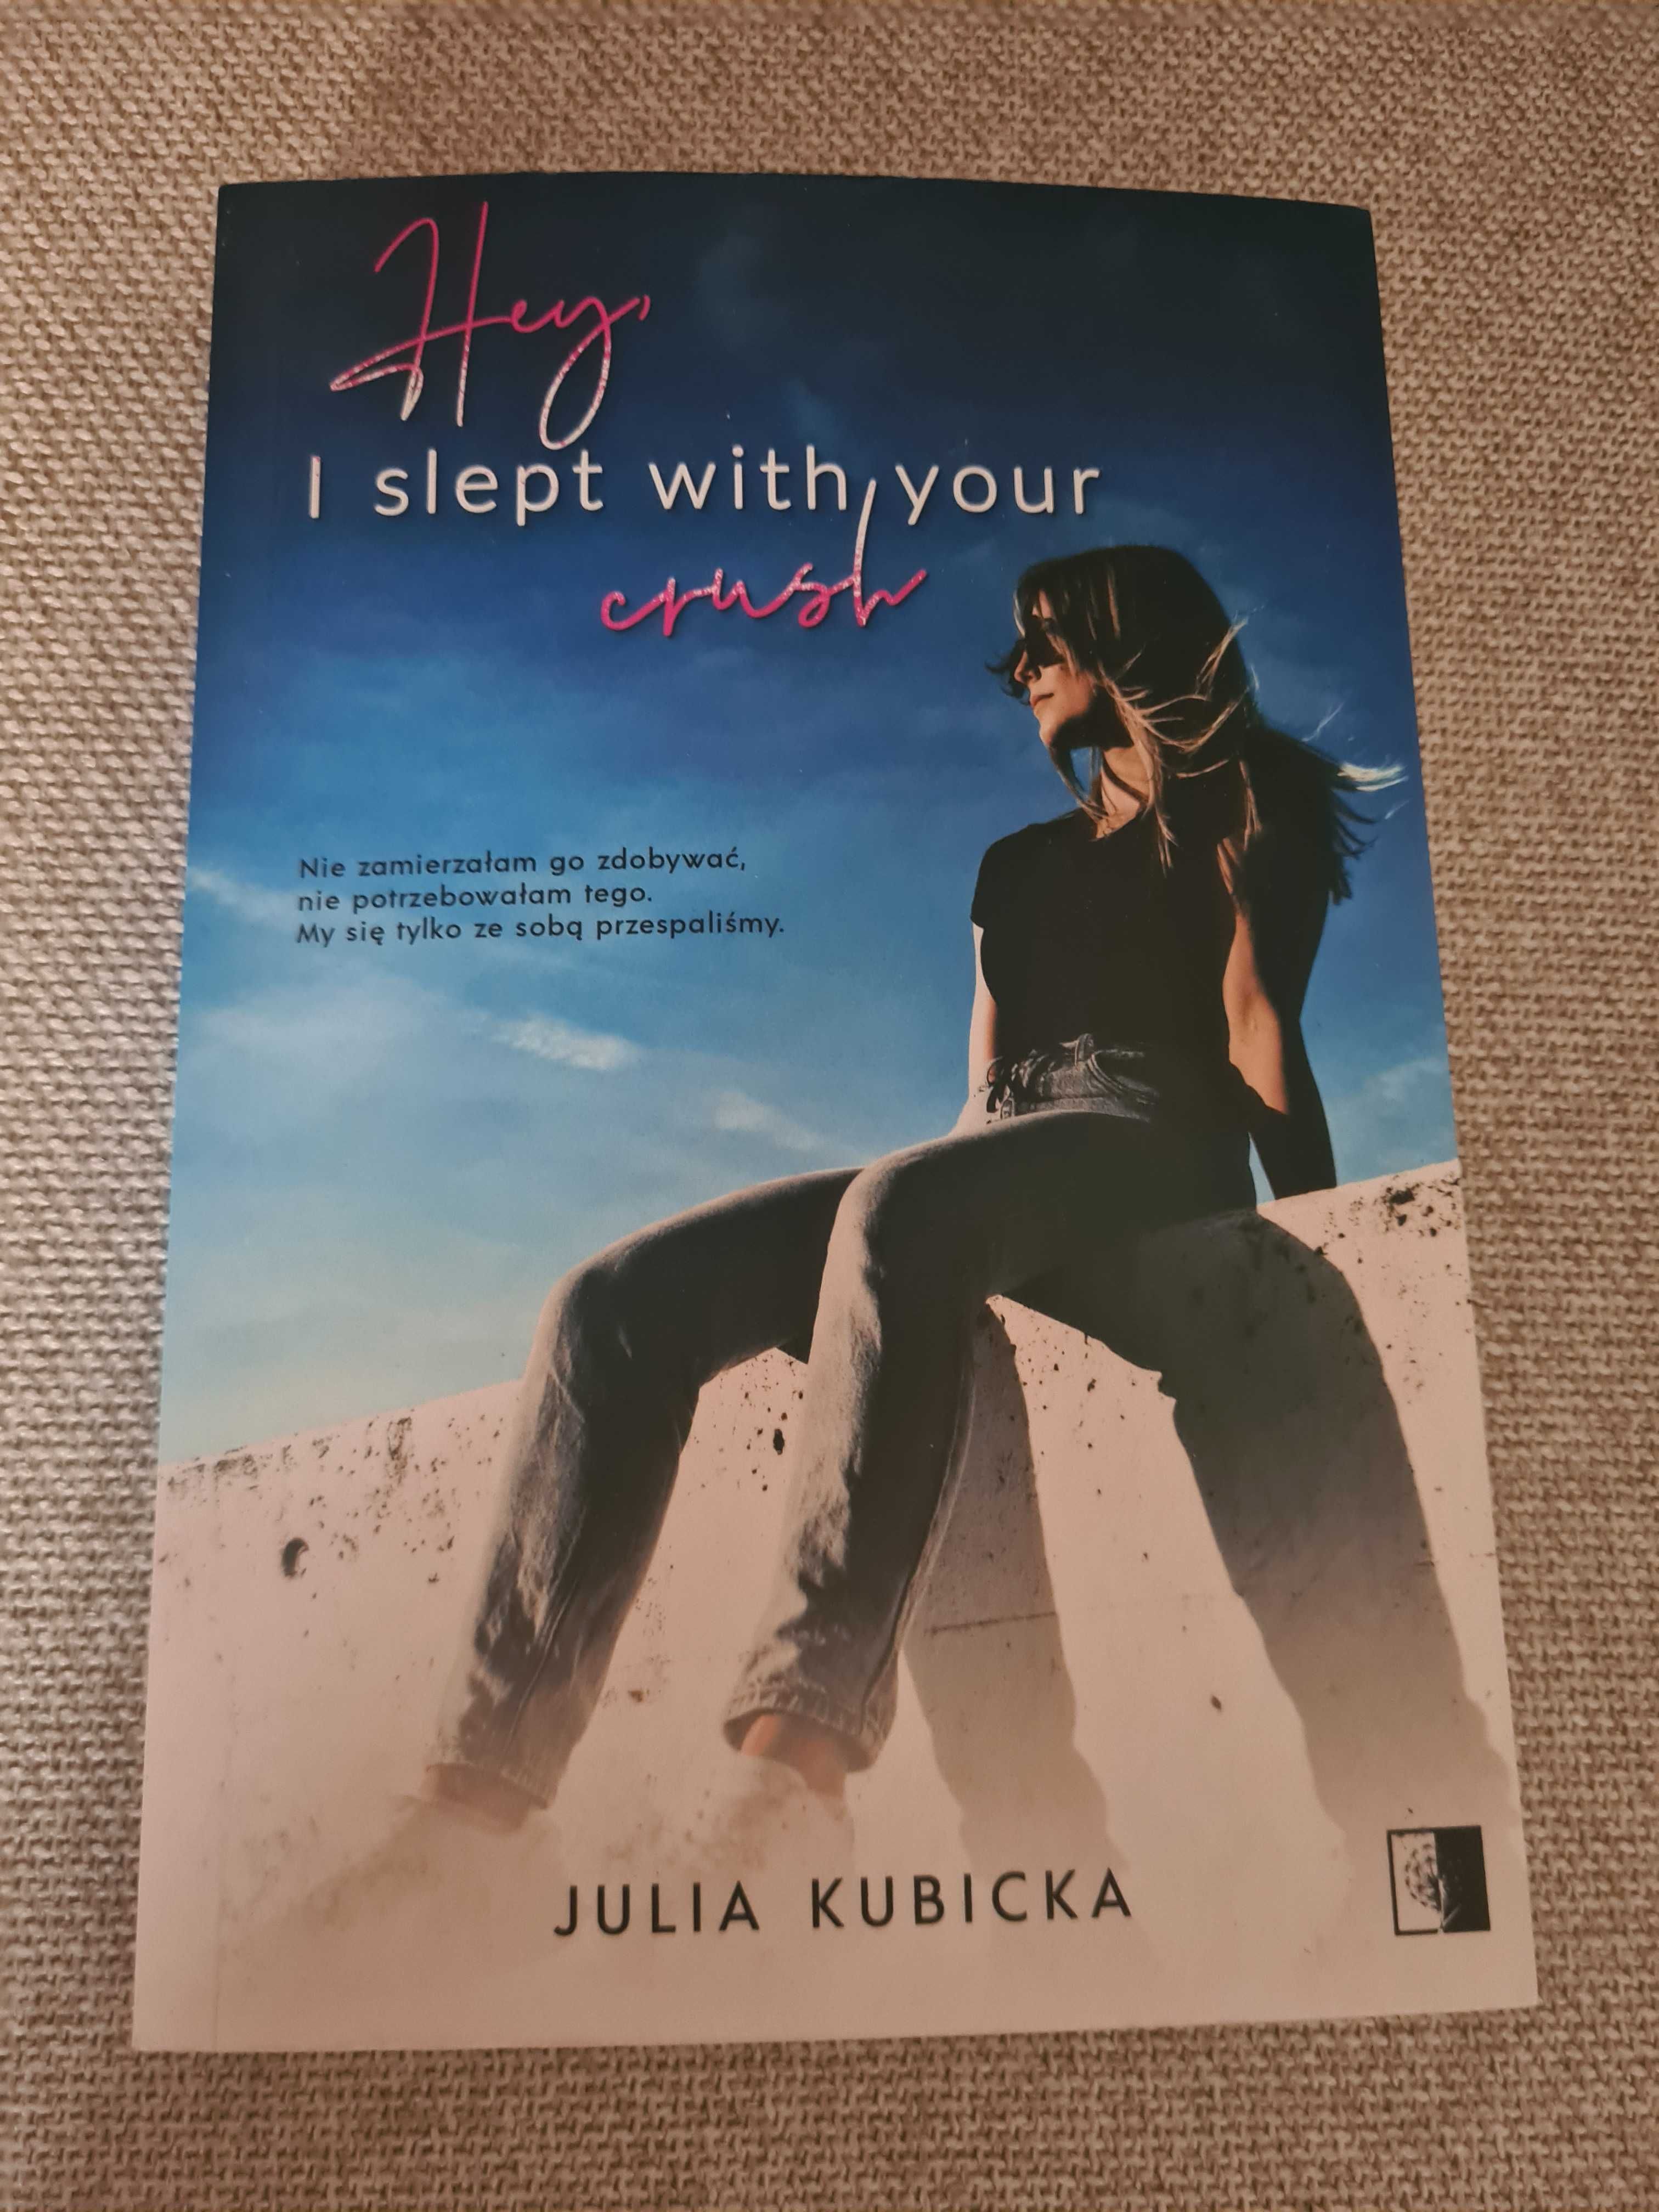 Hey I slept with your crush . Julia Kibicka